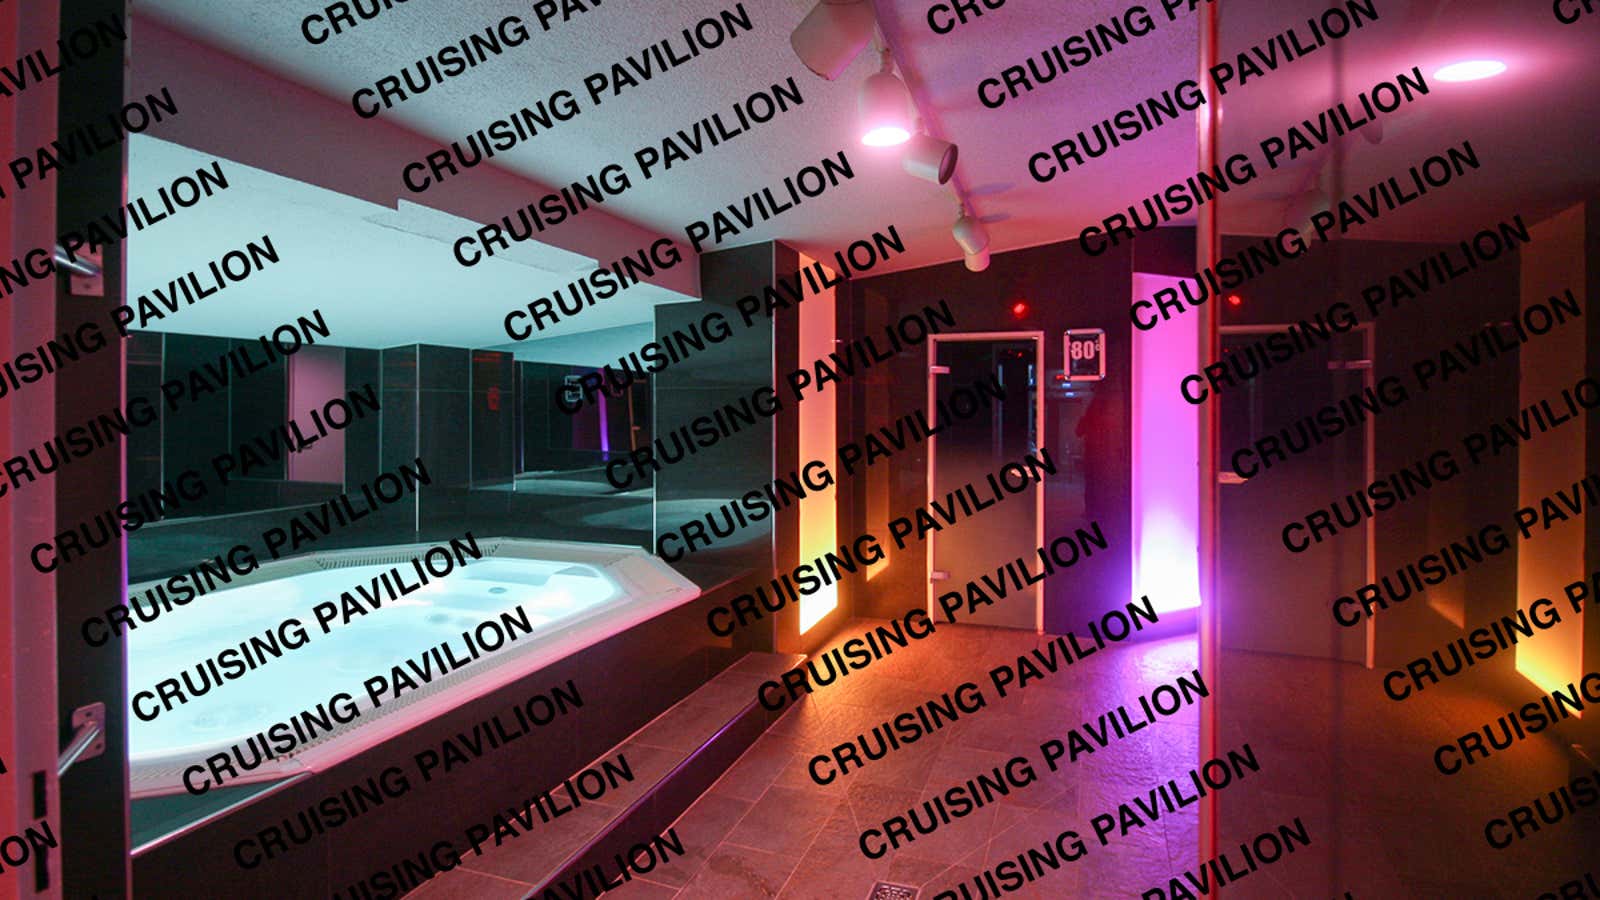 The Cruising Pavilion Installation celebrates a divisive sexual practice.